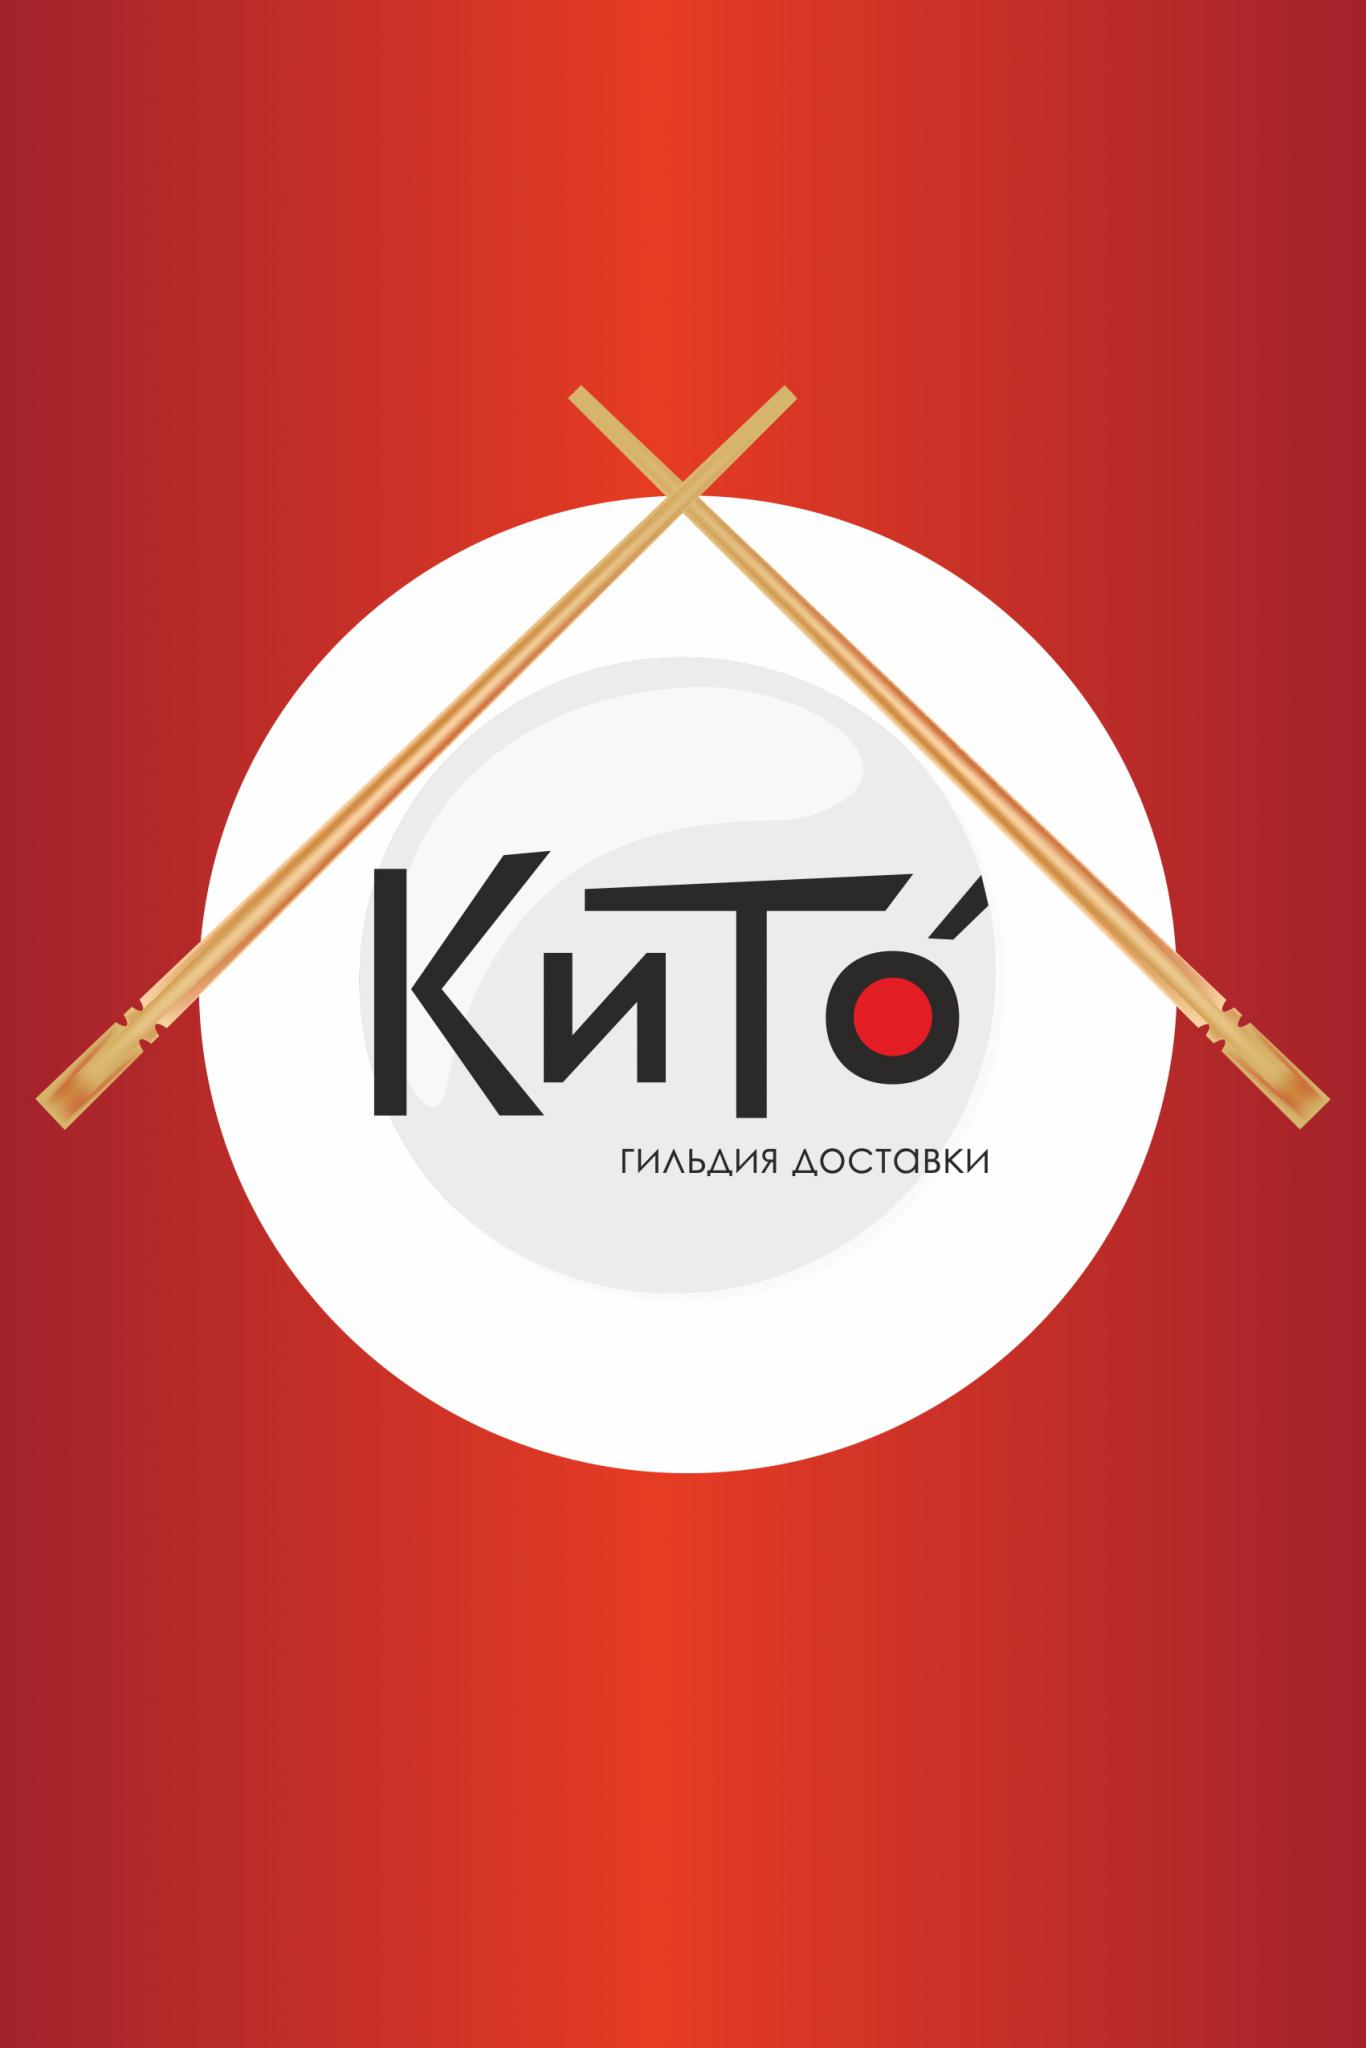 KiTo-Гильдия доставки